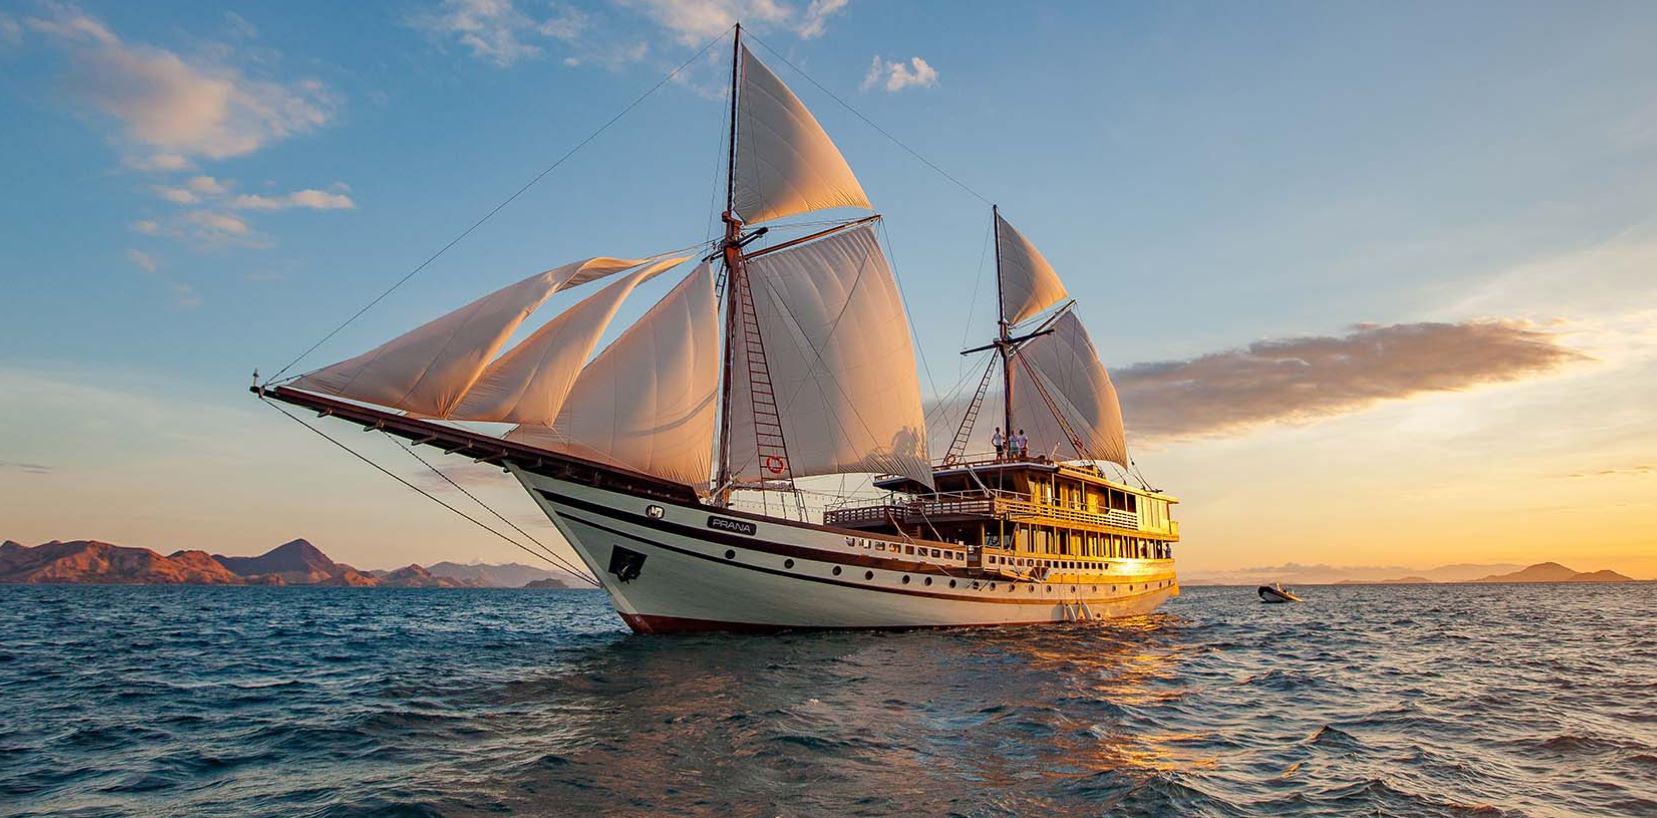 Explore Labuan Bajo by Pinisi Boat: A Voyage into Paradise